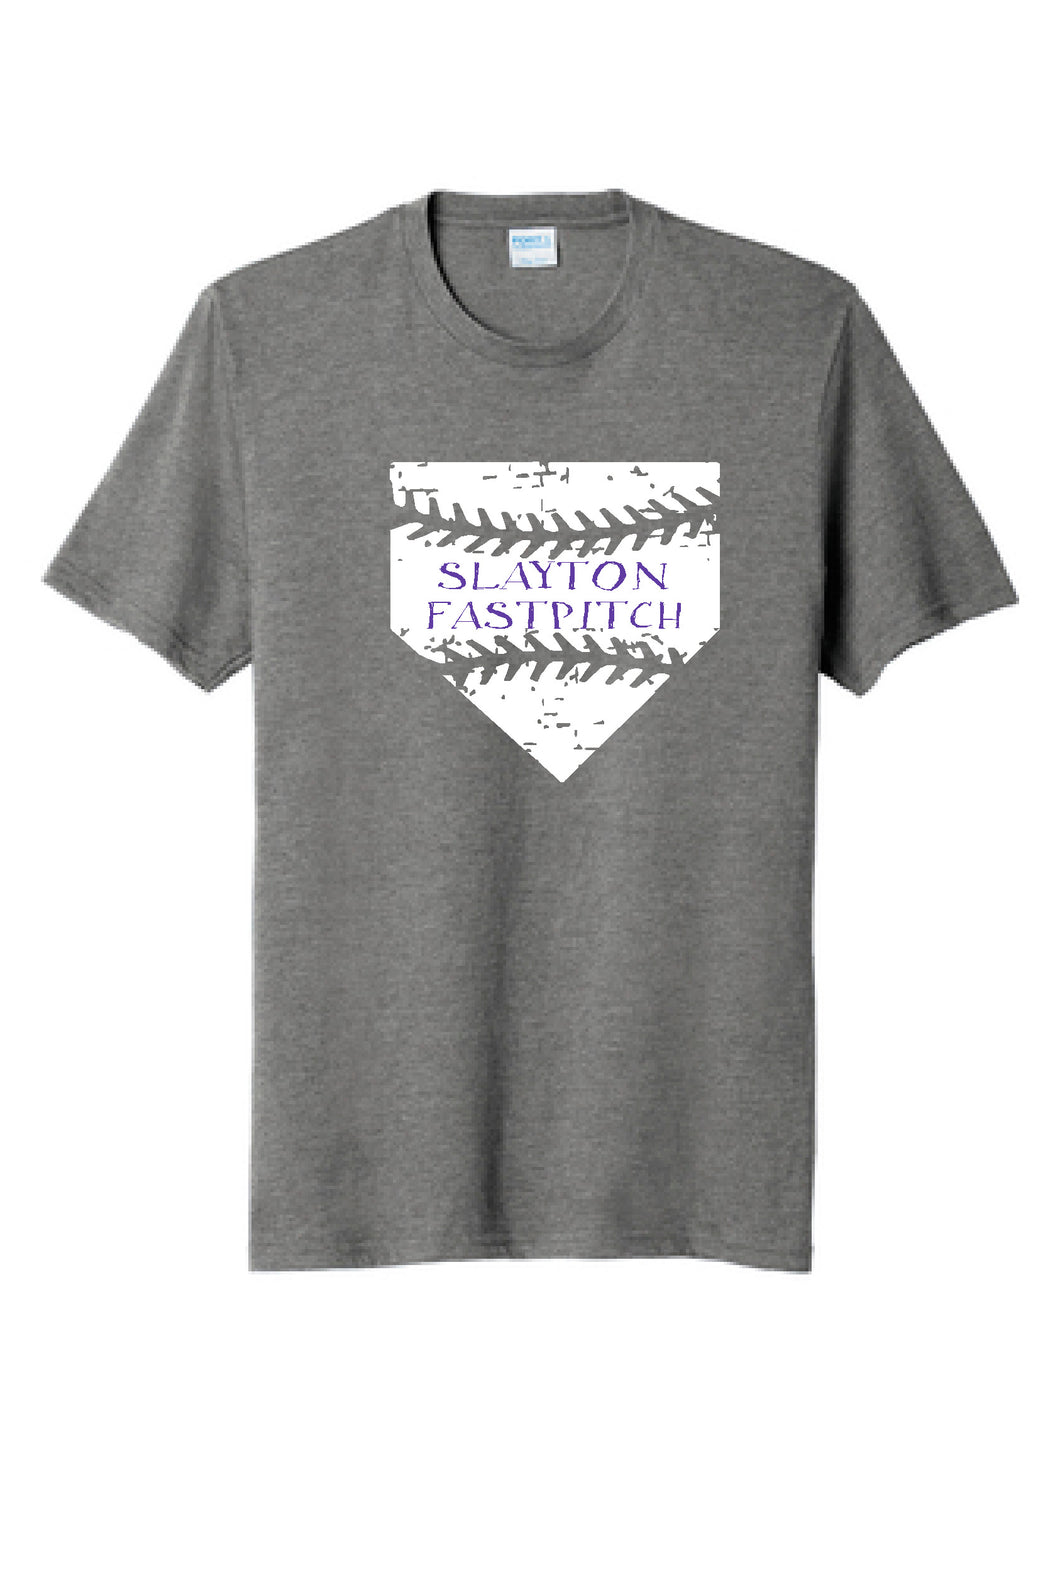 Slayton Fastpitch Softball Port & Co.  T-Shirt